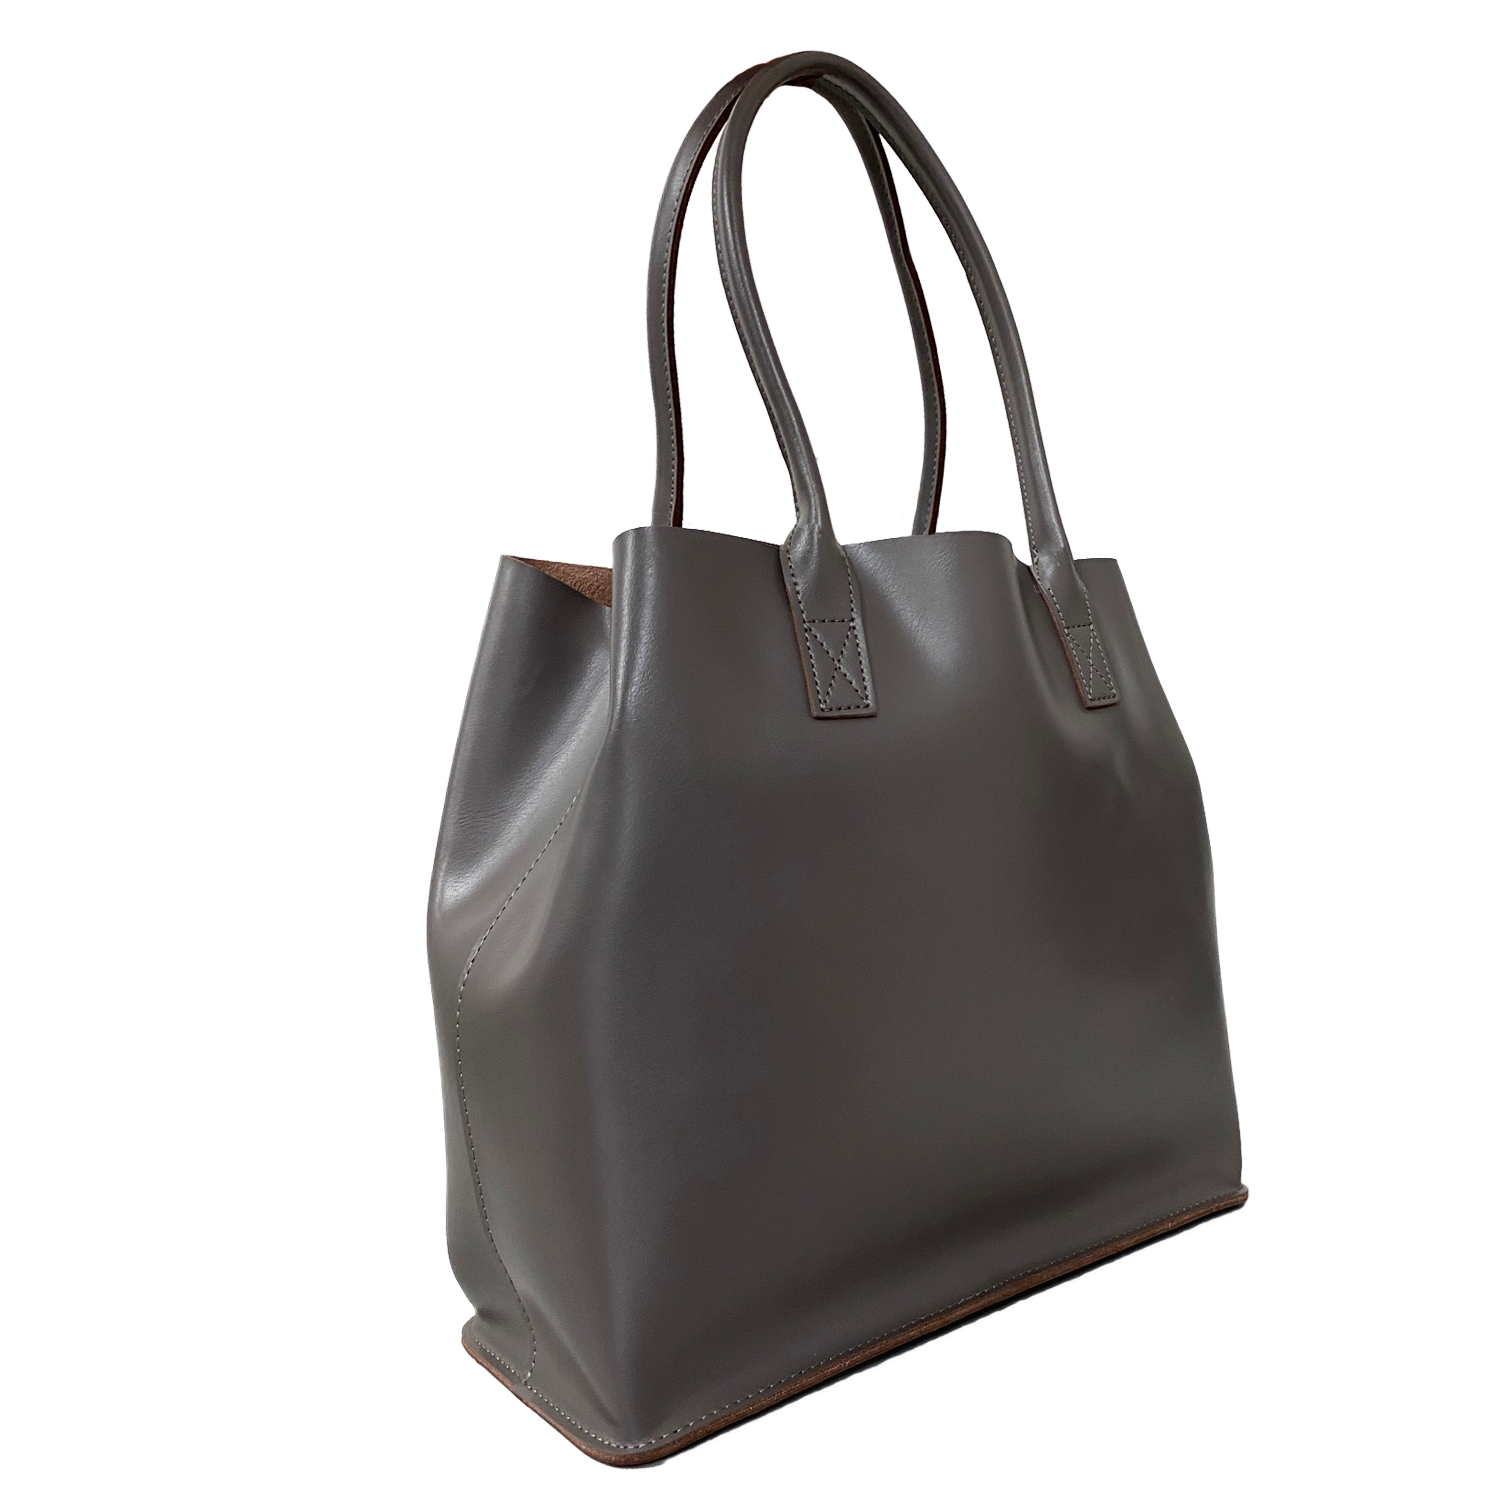 BIRCHGROVE - Women's Grey Genuine Leather Tote Bag freeshipping - BeltNBags